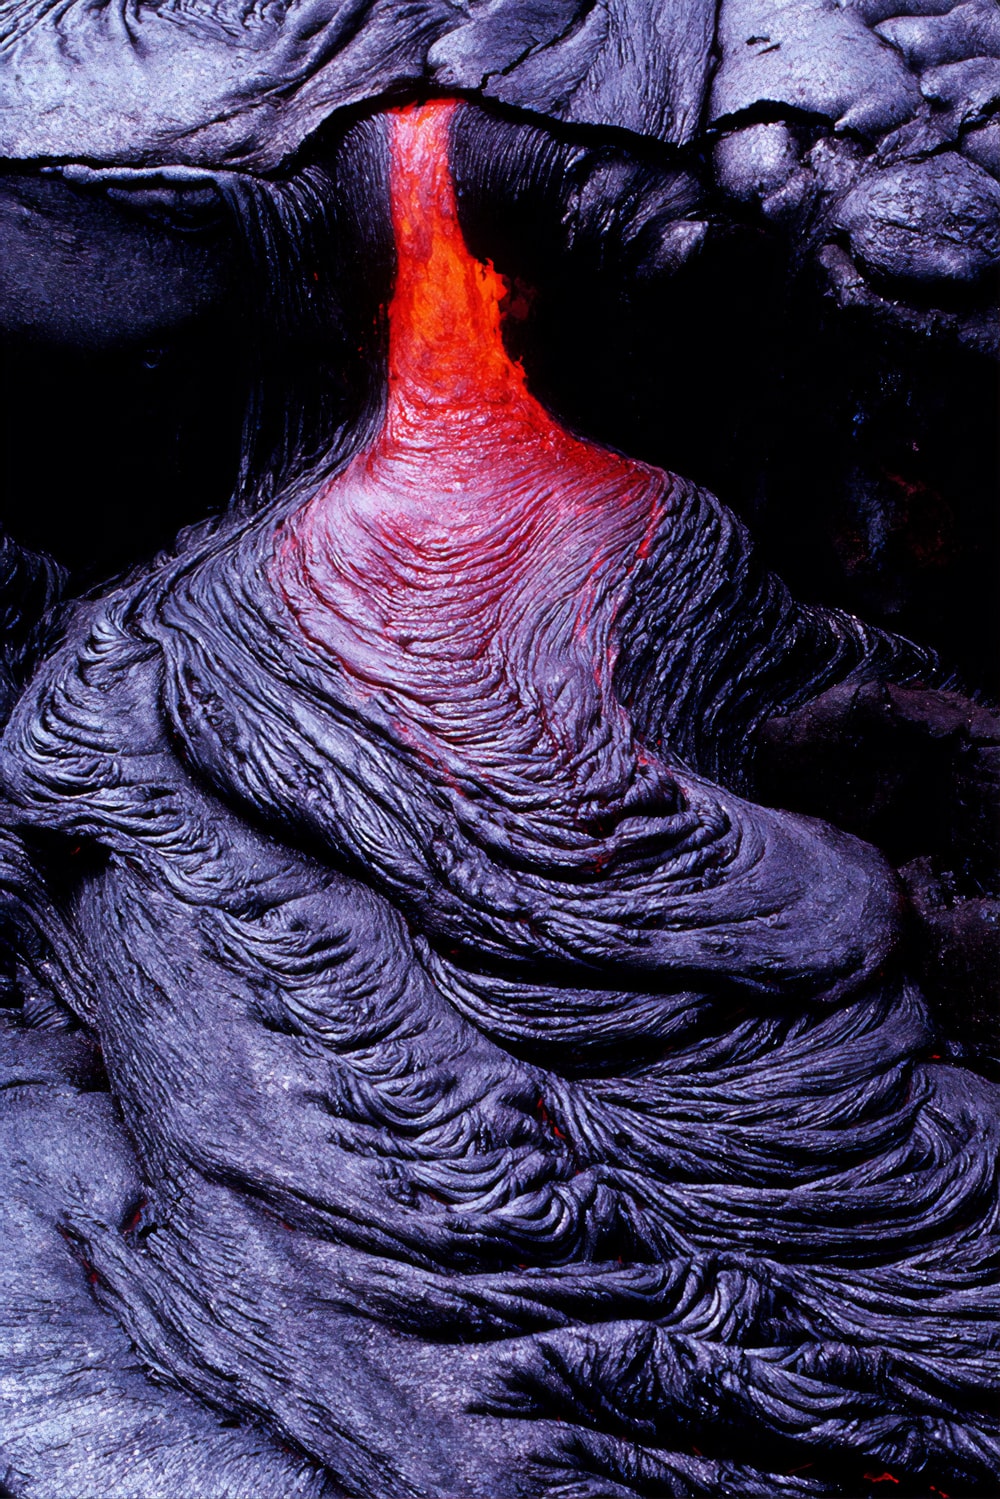 Volcano Hd Lava Wallpapers